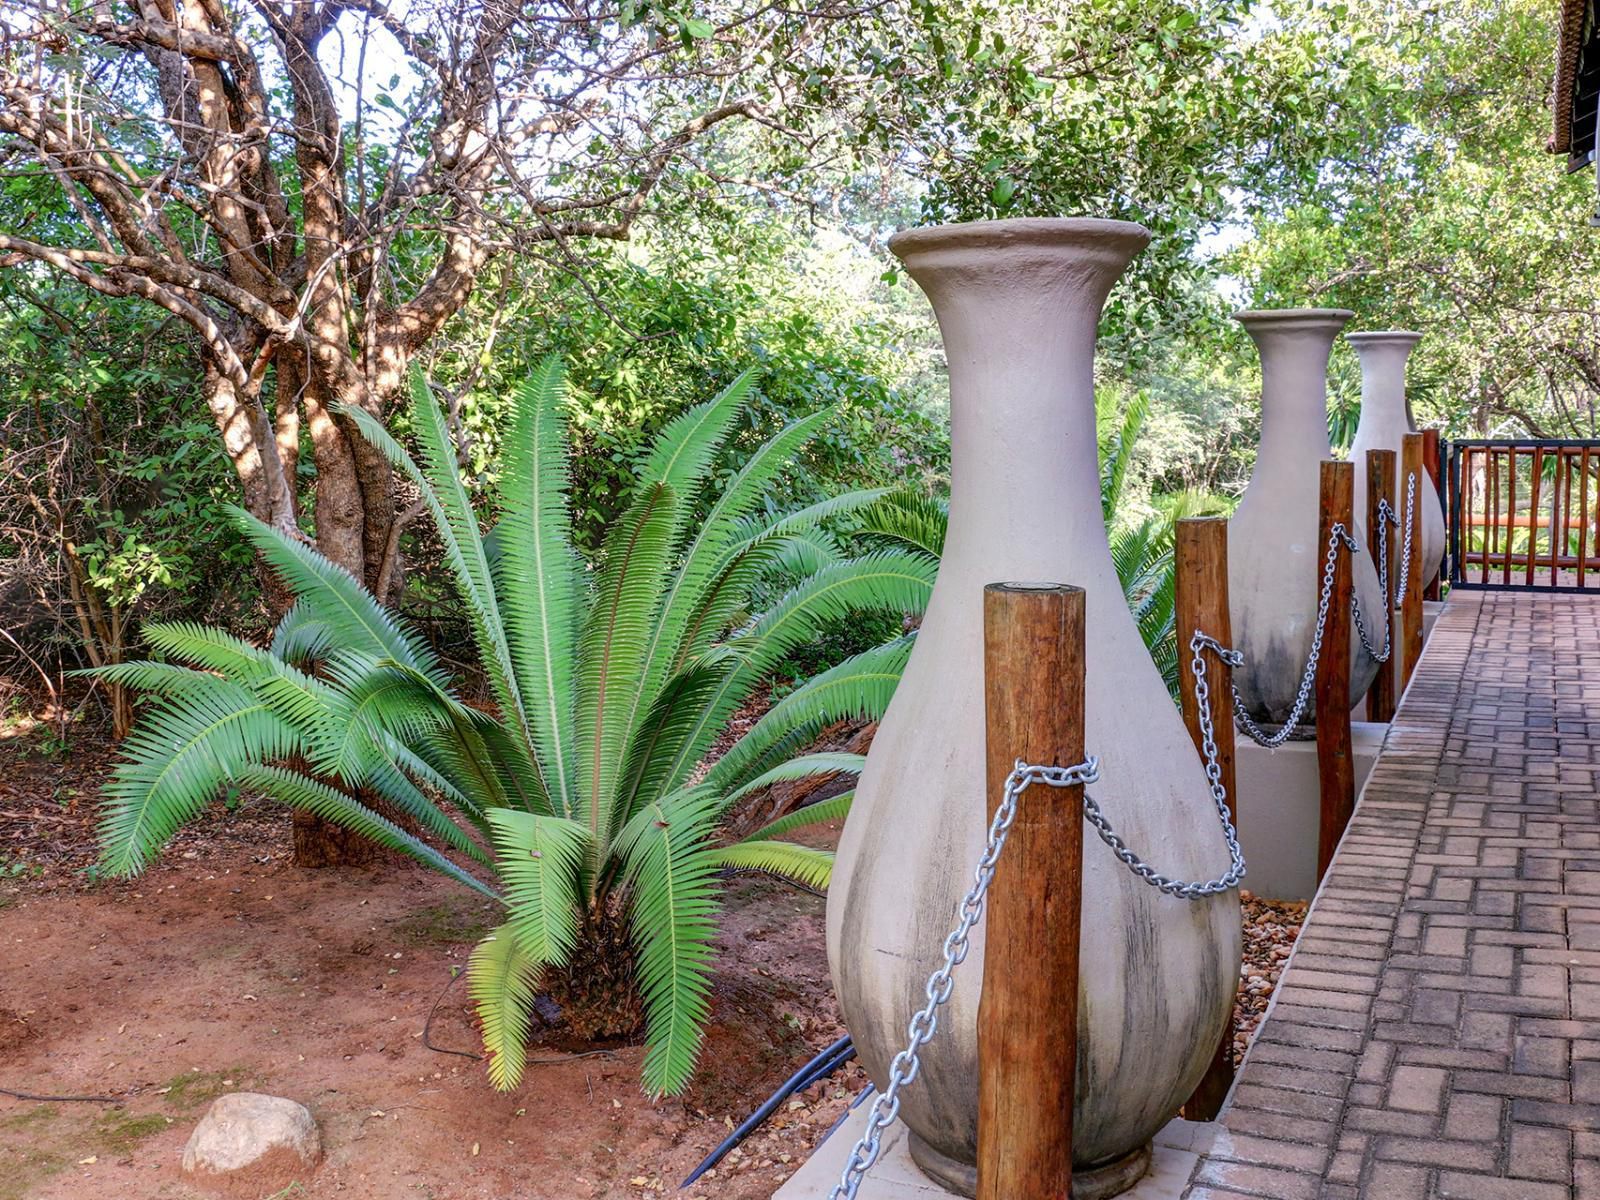 The Bushbabies Elite Lodge Hoedspruit Limpopo Province South Africa Palm Tree, Plant, Nature, Wood, Garden